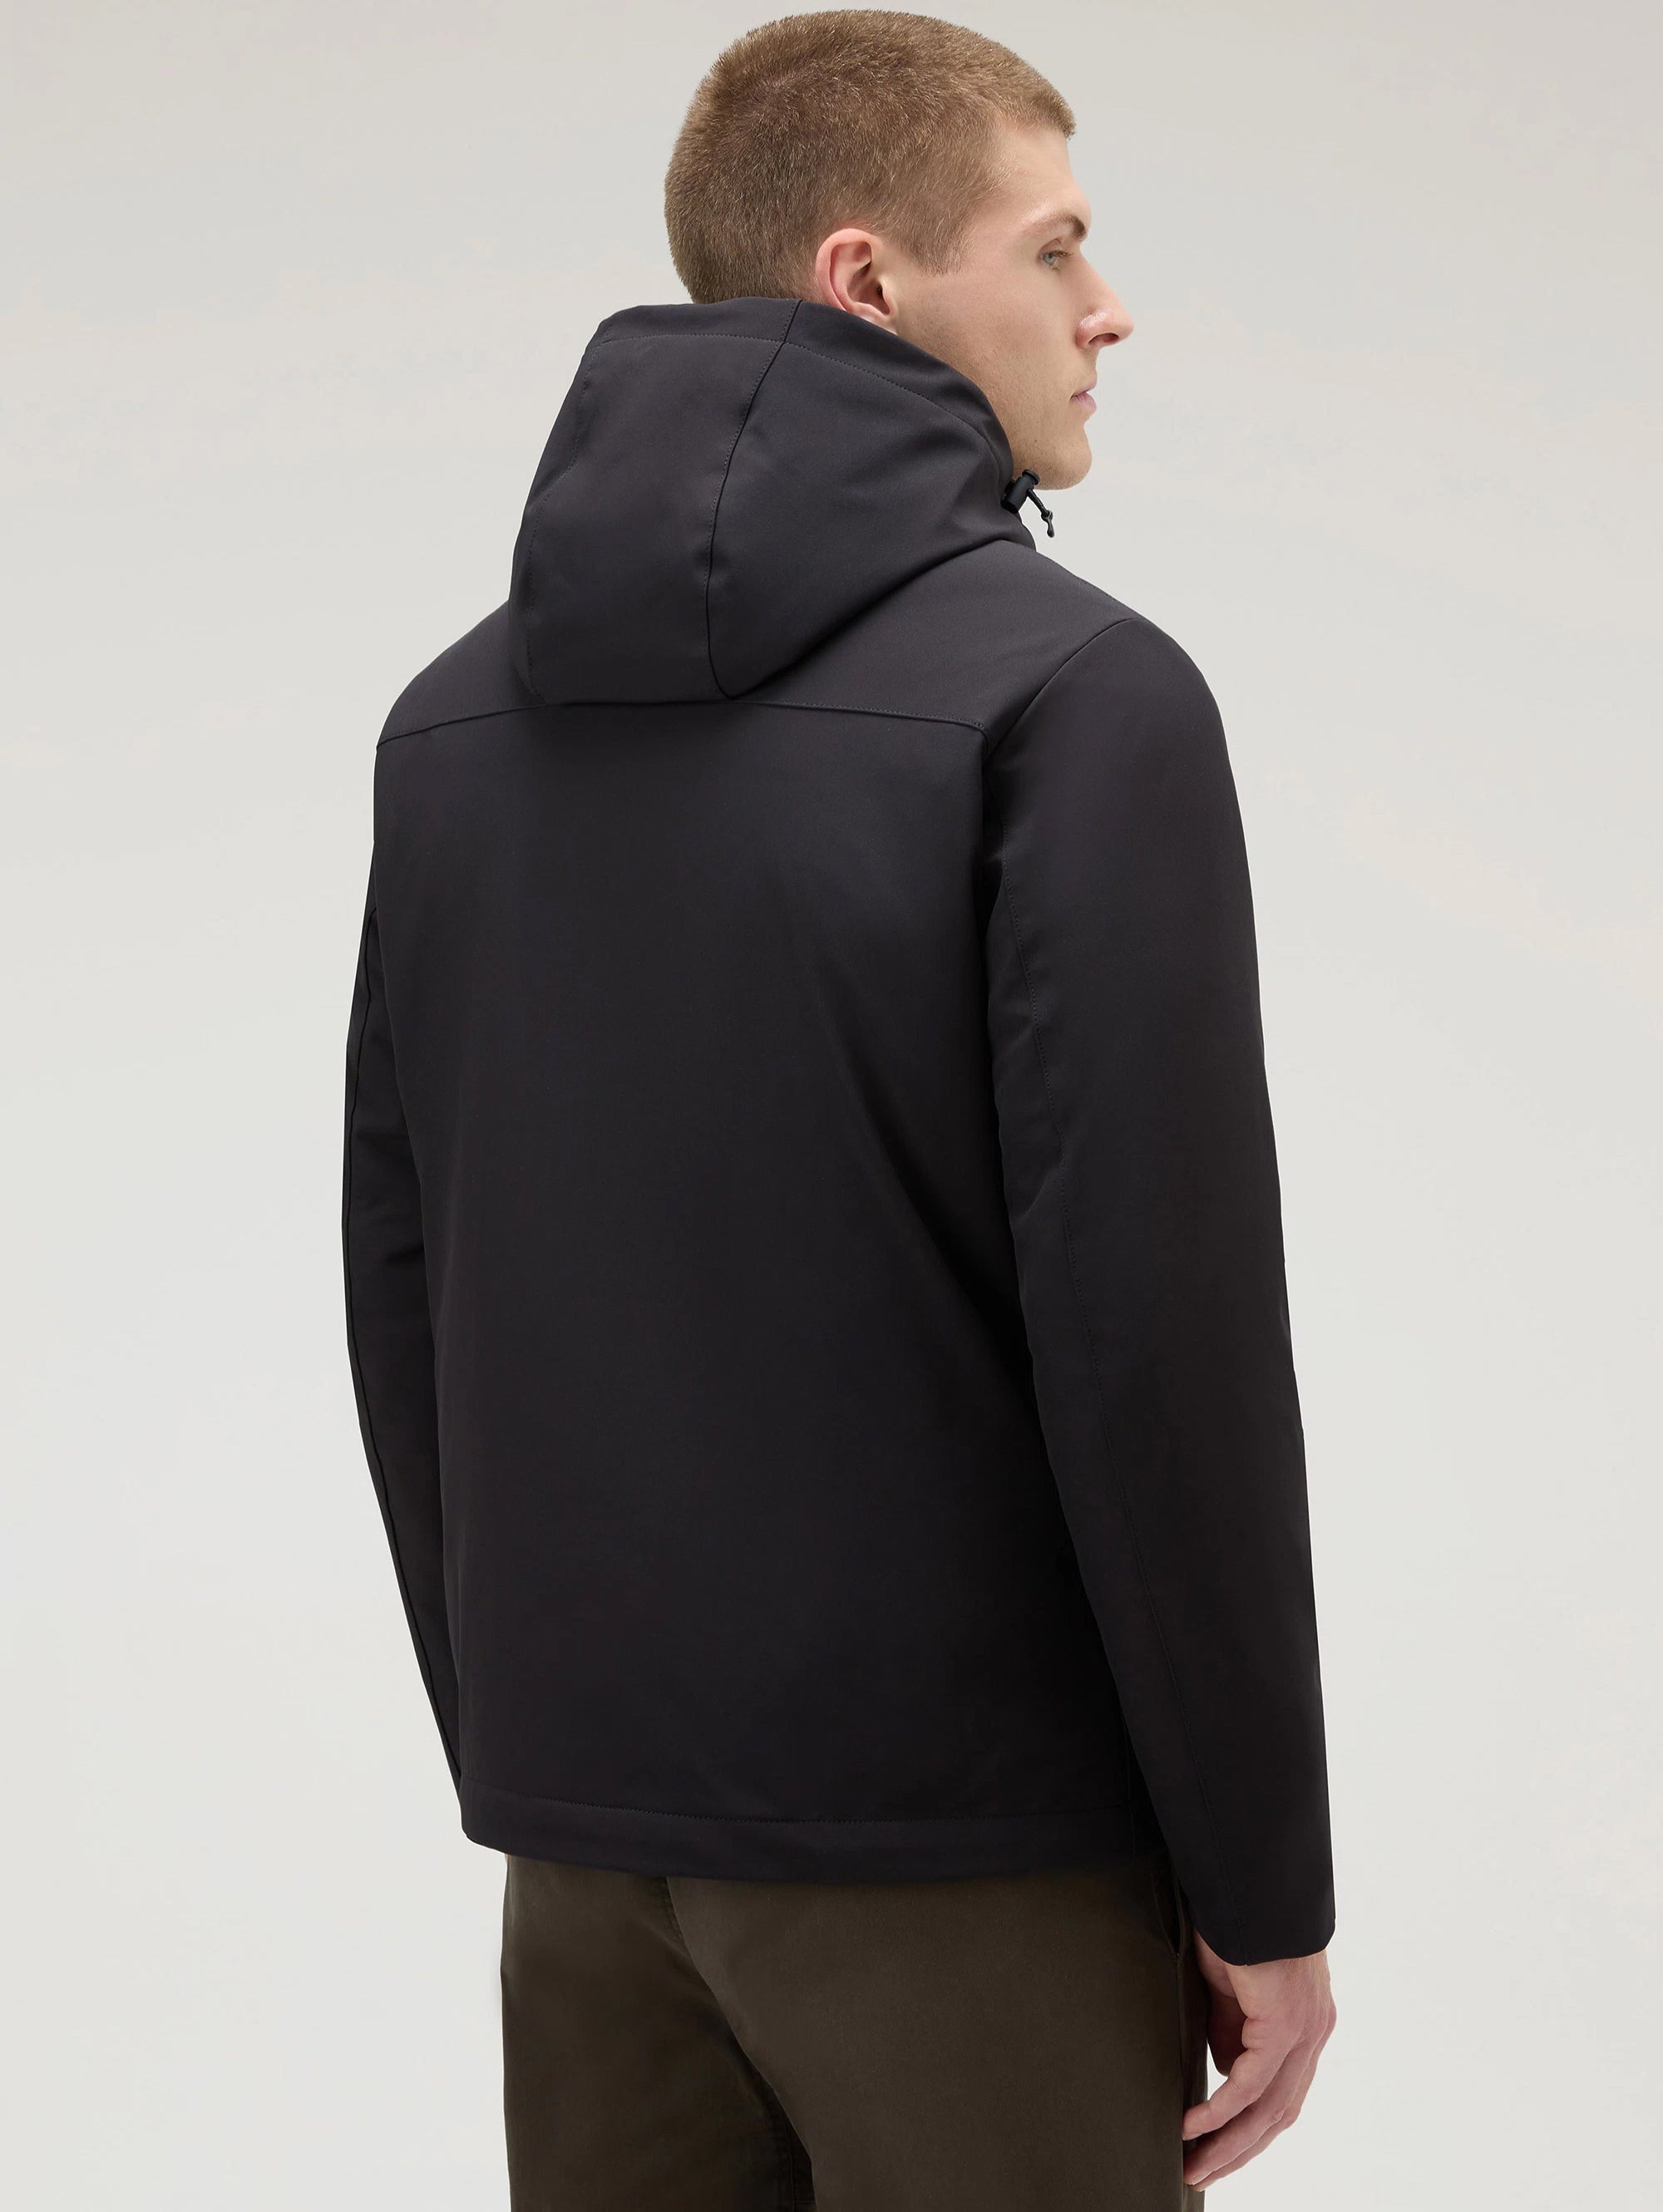 Pacific Black Hooded Windproof Jacket